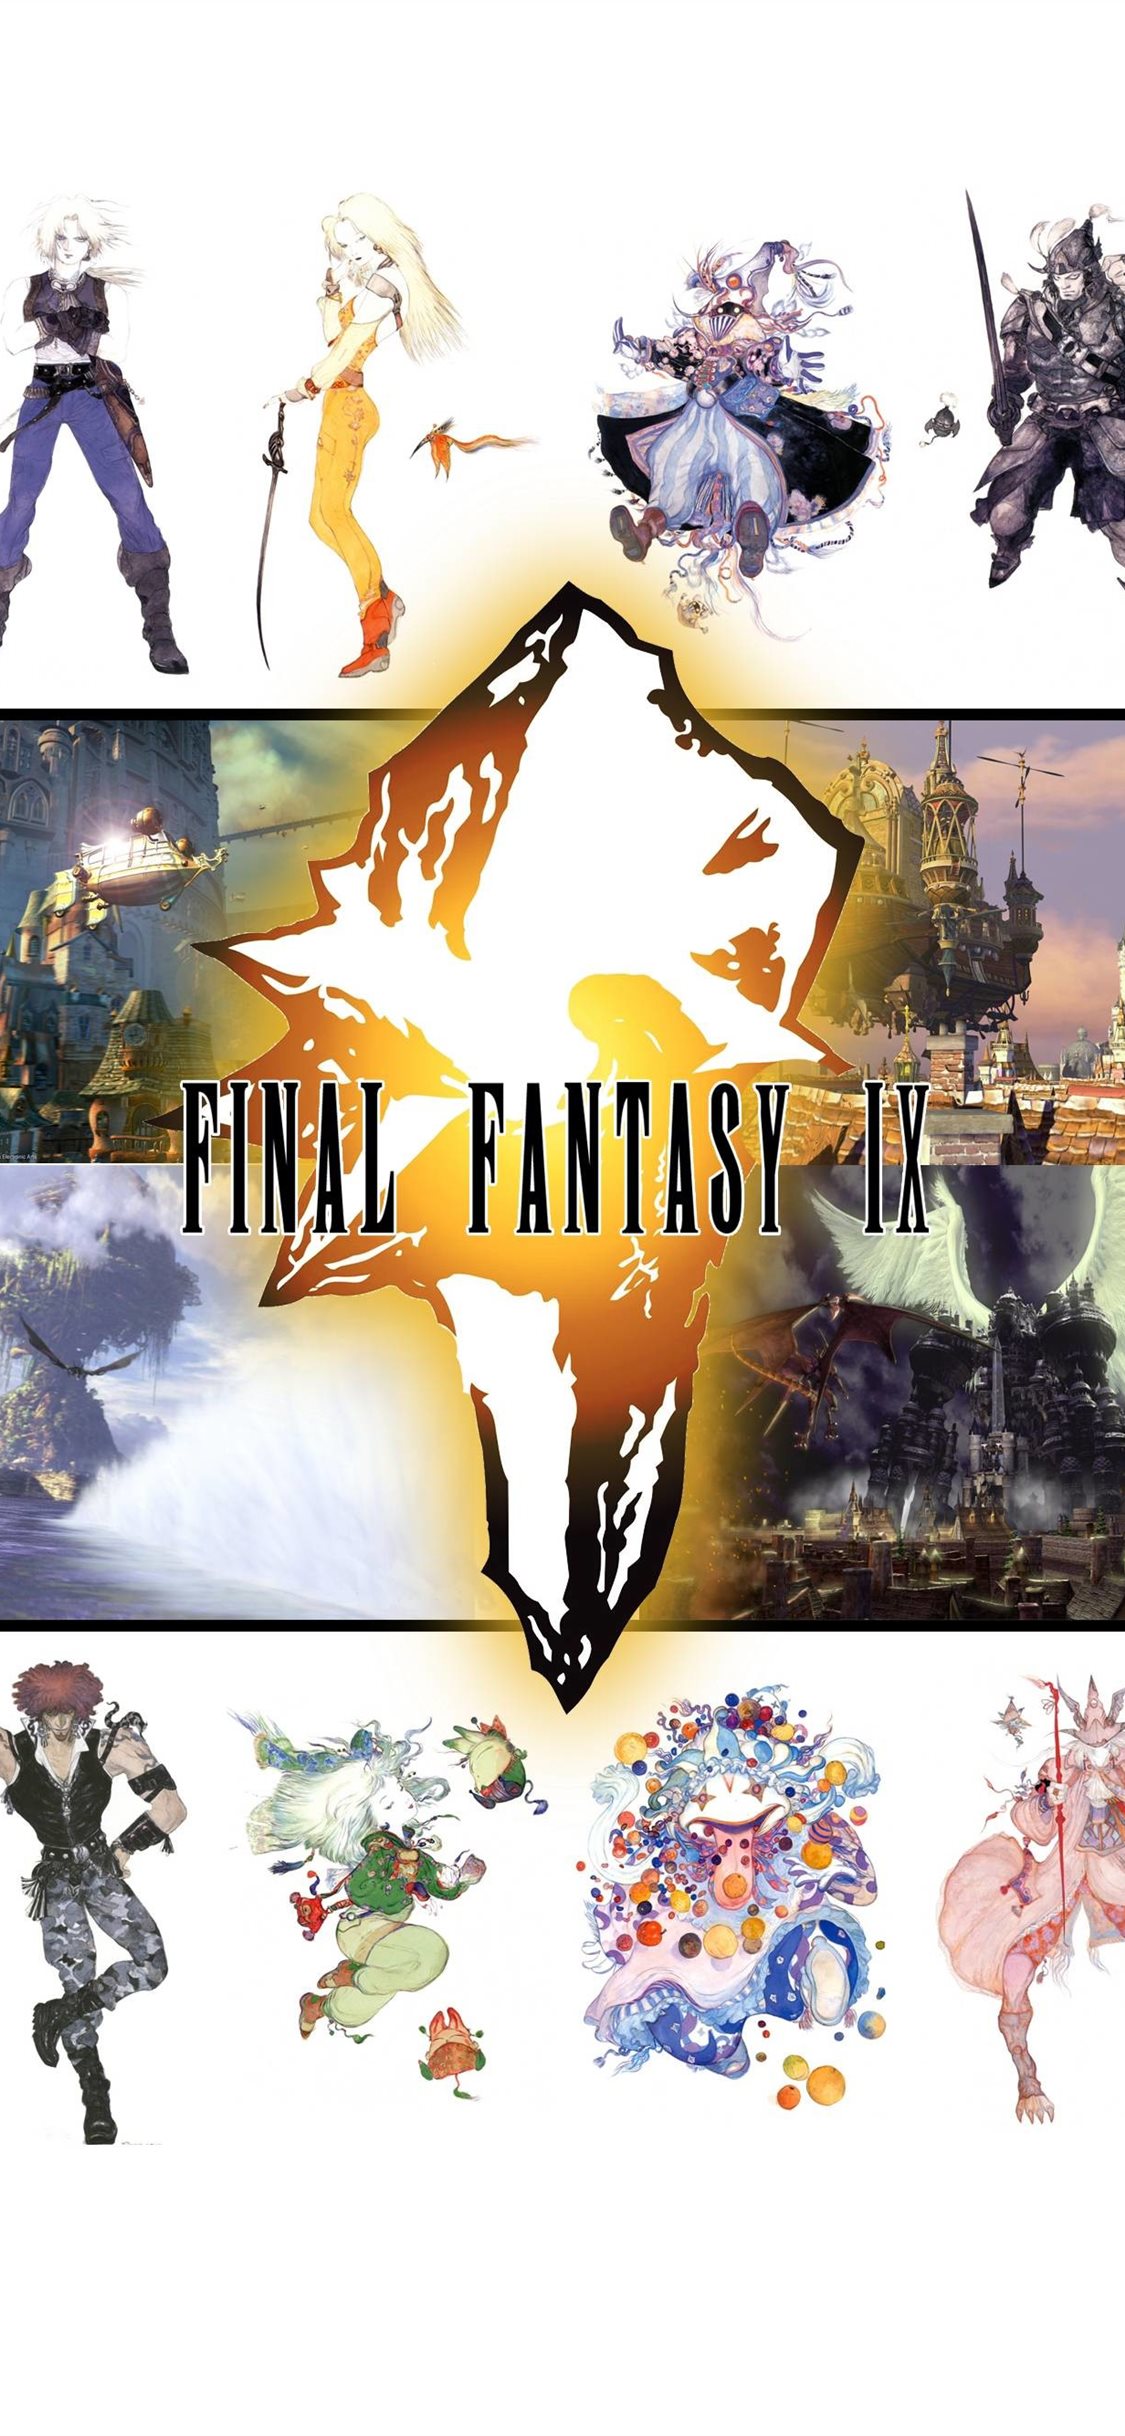 Final Fantasy IX 1080p Wallpaper - Wallpaperforu